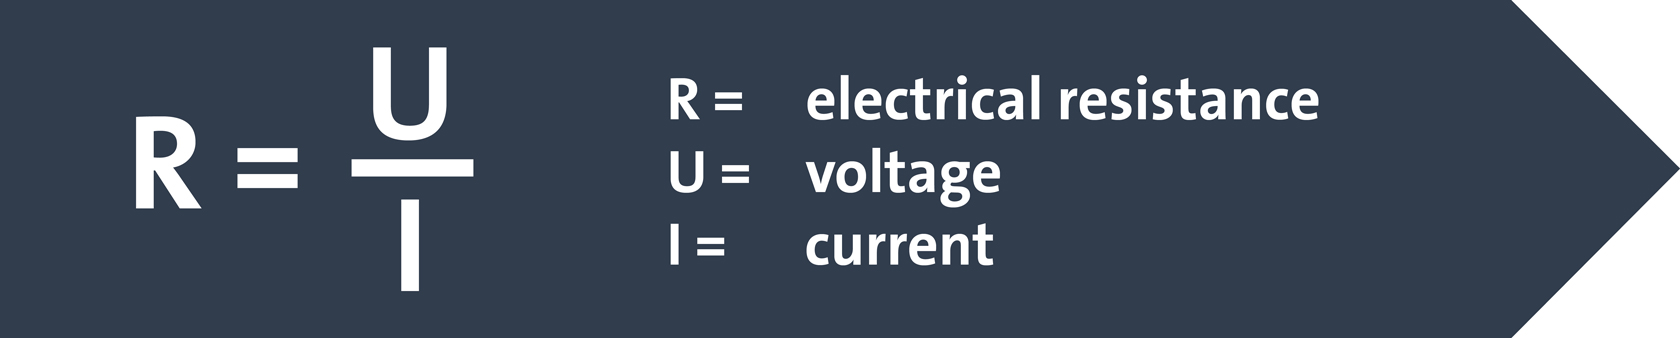 electrical resistance (R) = voltage (U) divided by current (I)